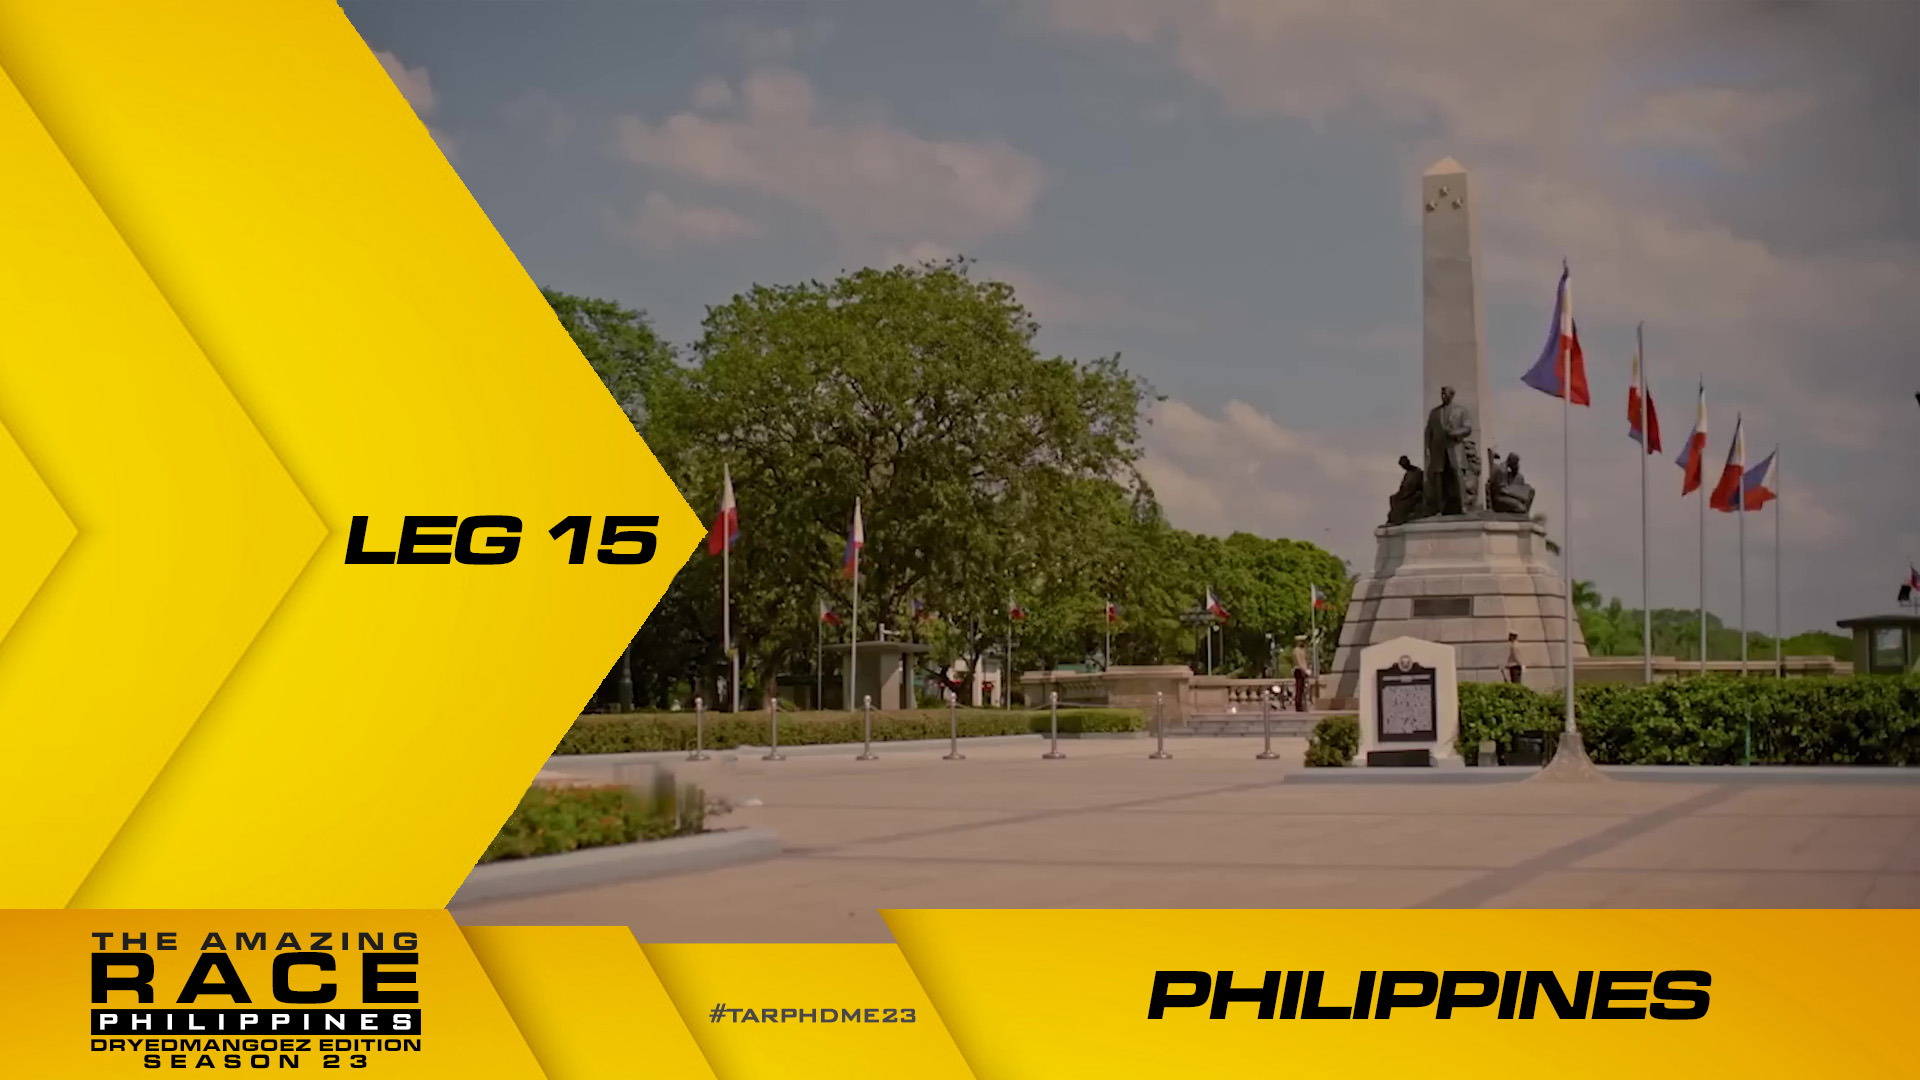 The Amazing Race Philippines: DryedMangoez Edition 23, Leg 15 – Philippines